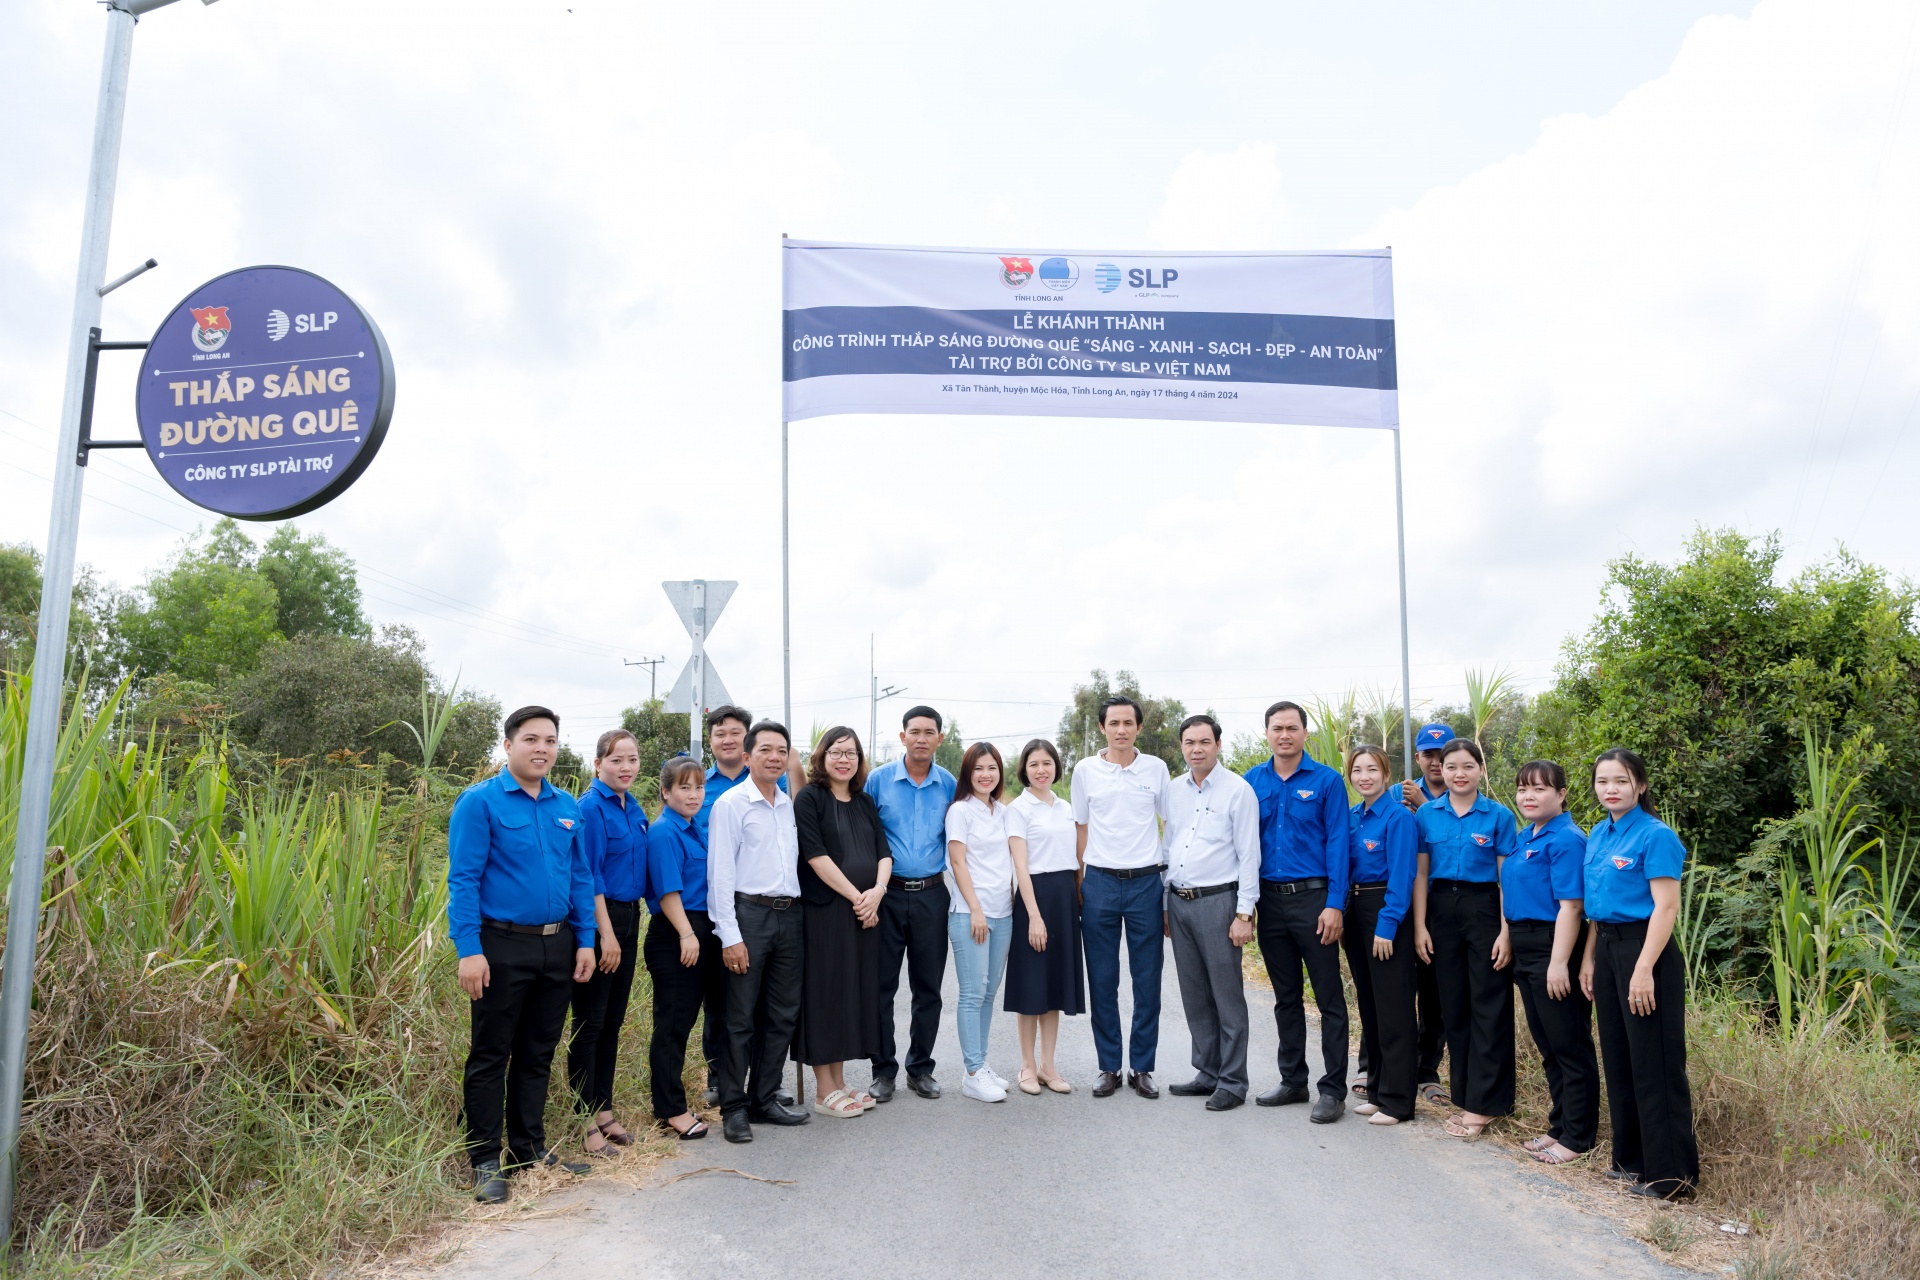 SLP Vietnam inaugurates rural road solar lighting project in Long An